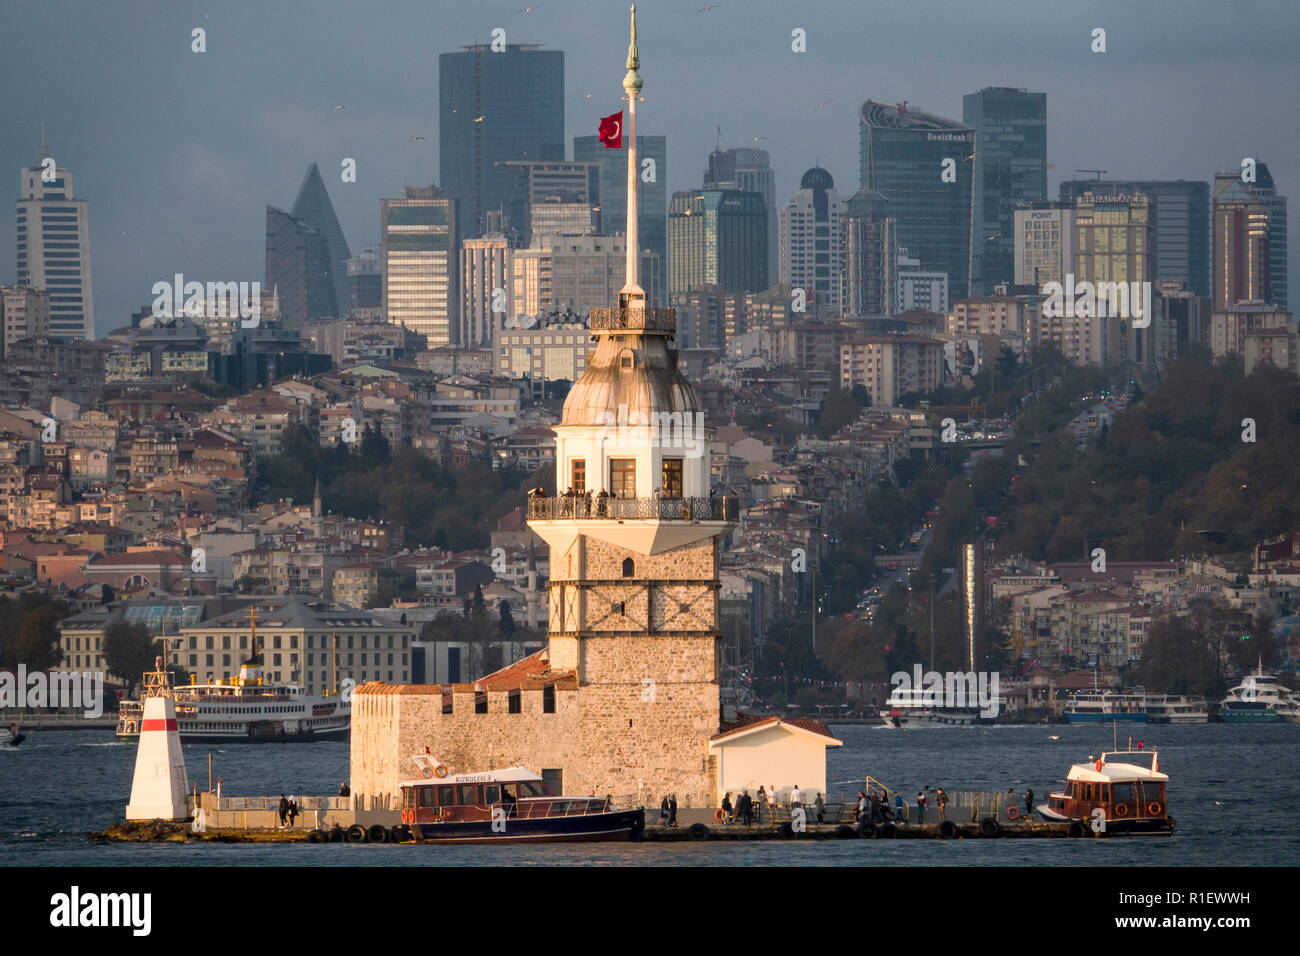 Maiden's Tower (Kız Kulesi) former lighthouse on the Bosphorus in Istanbul, Turkey Stock Photo